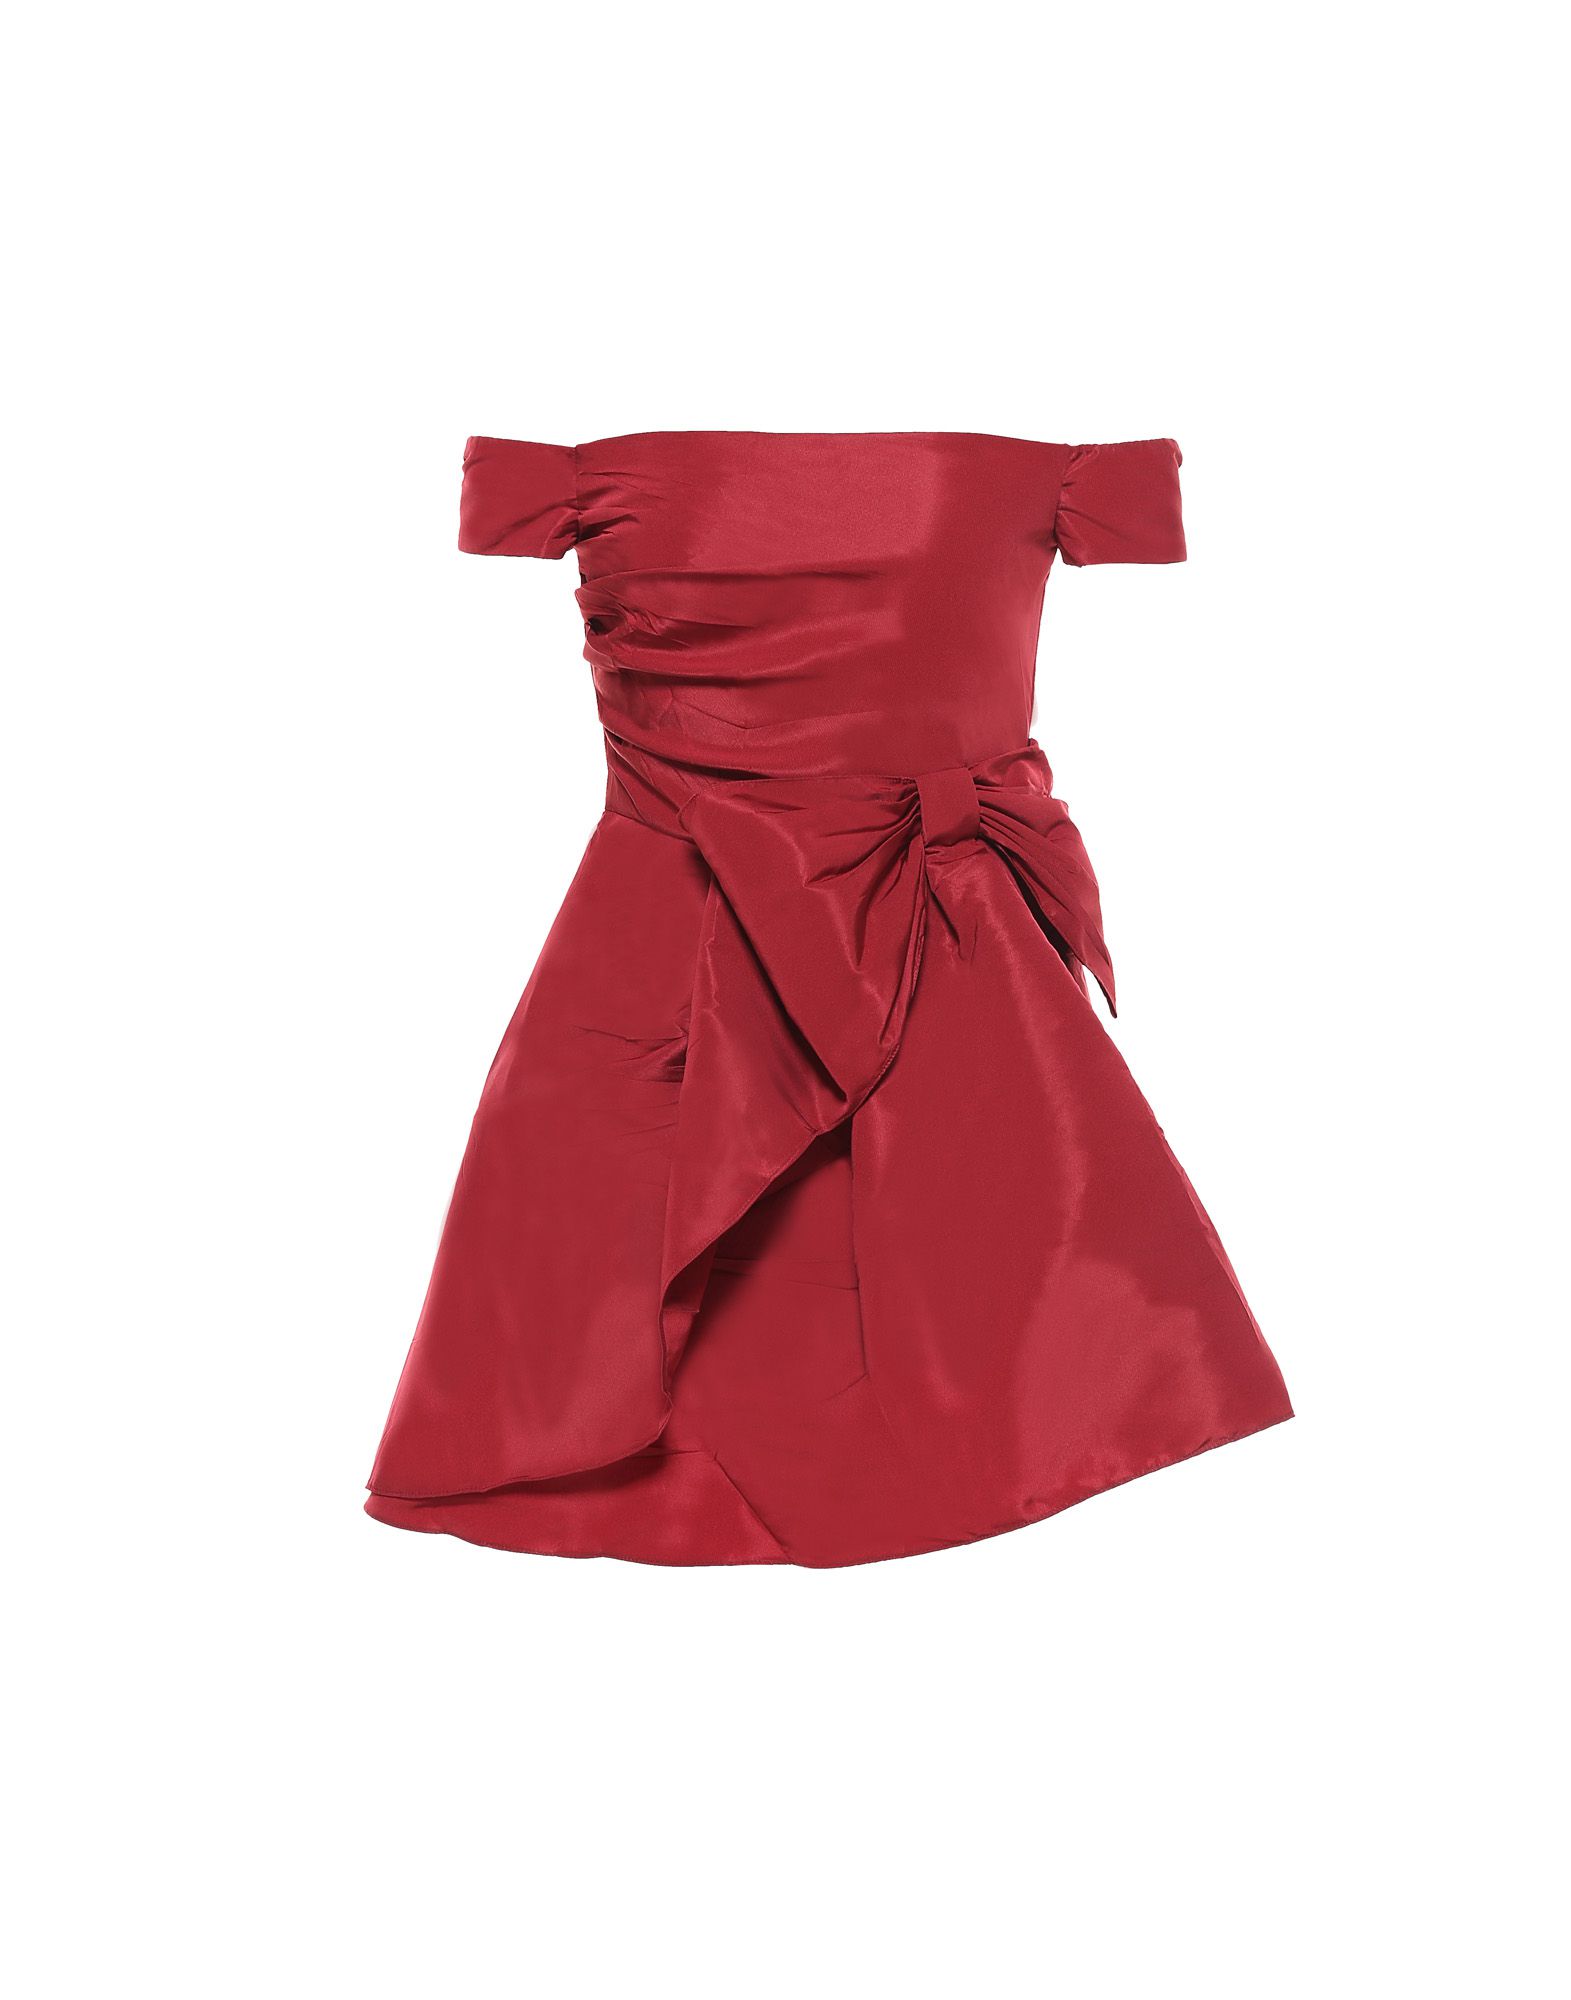 REDValentino Bow Detailed Wrinkled Faille Dress - Dress for Women ...